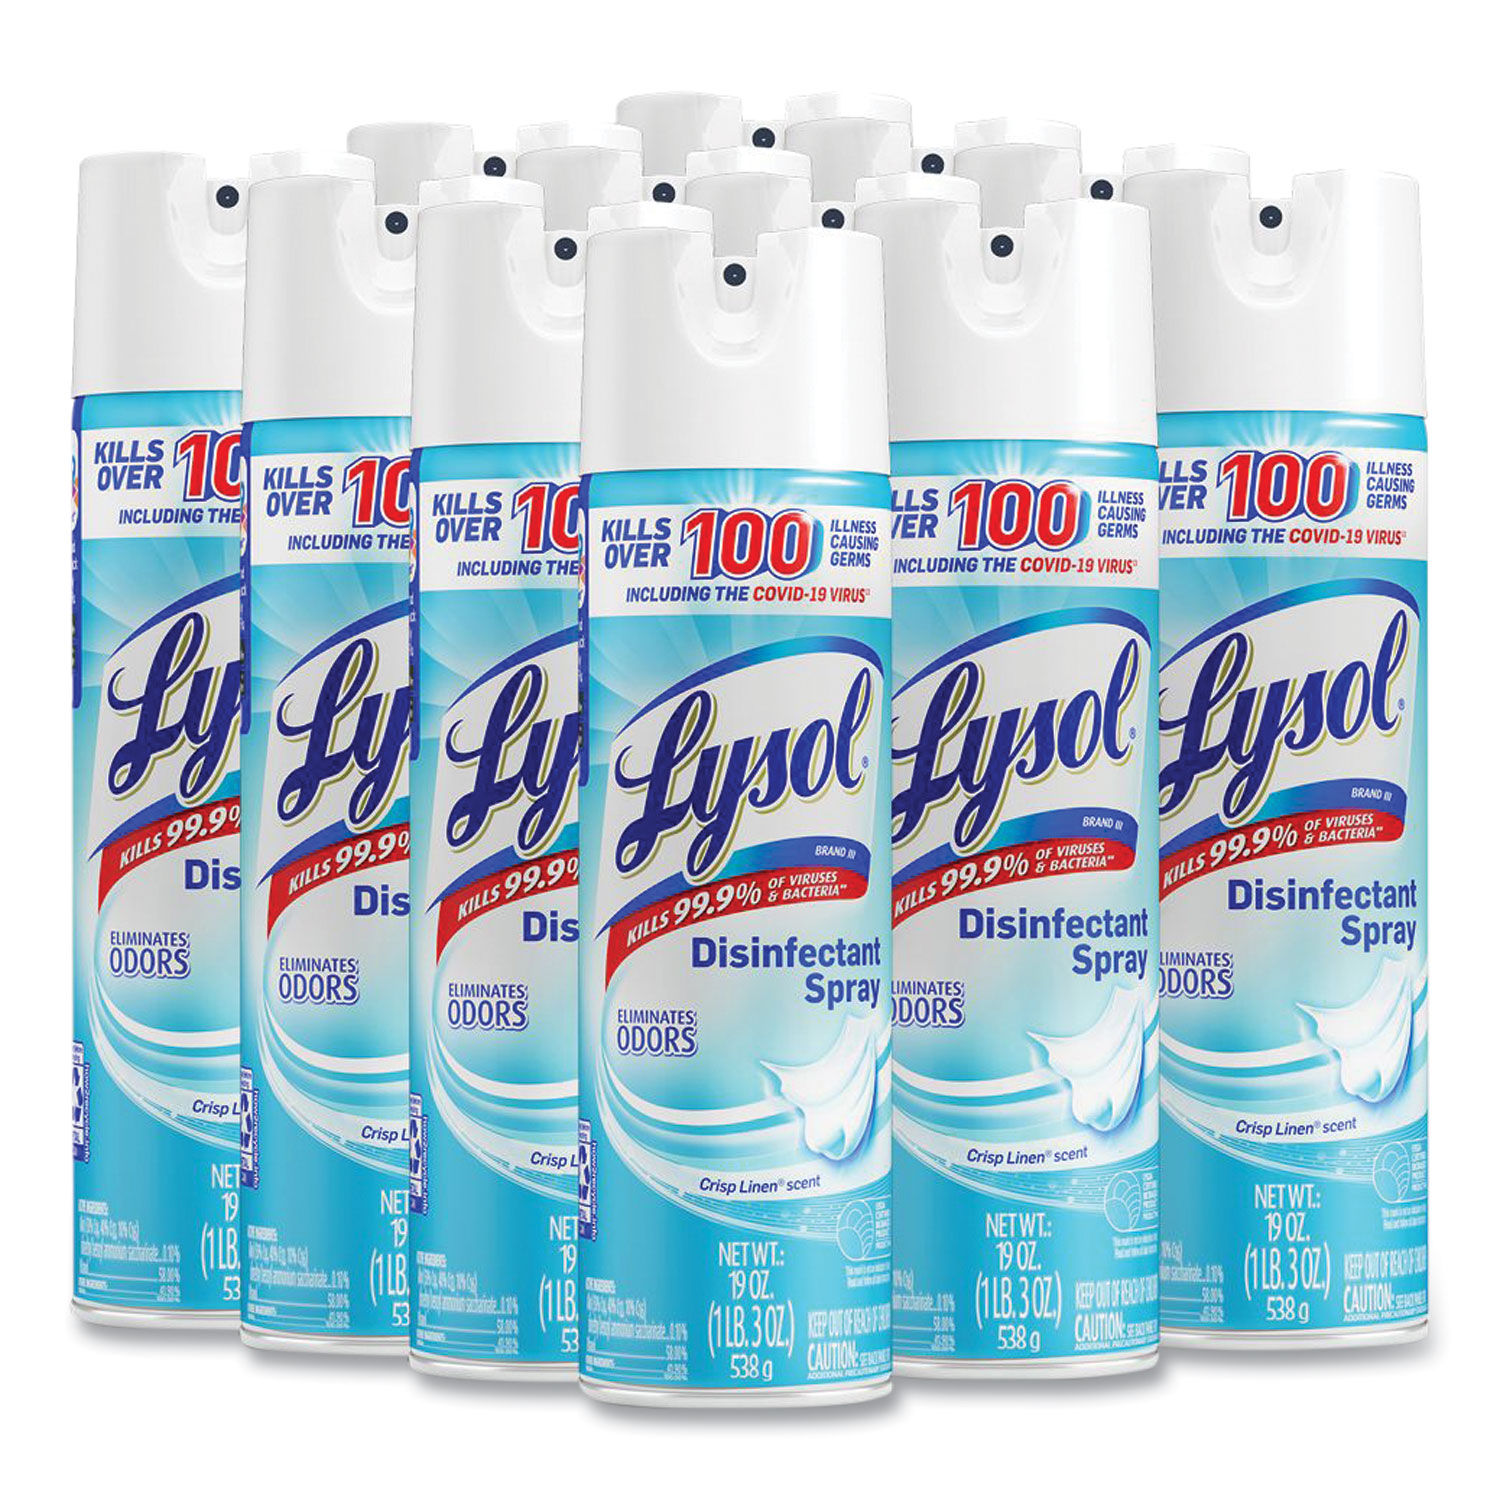 Disinfectant Spray Crisp Linen Scent, 19 oz Aerosol Spray